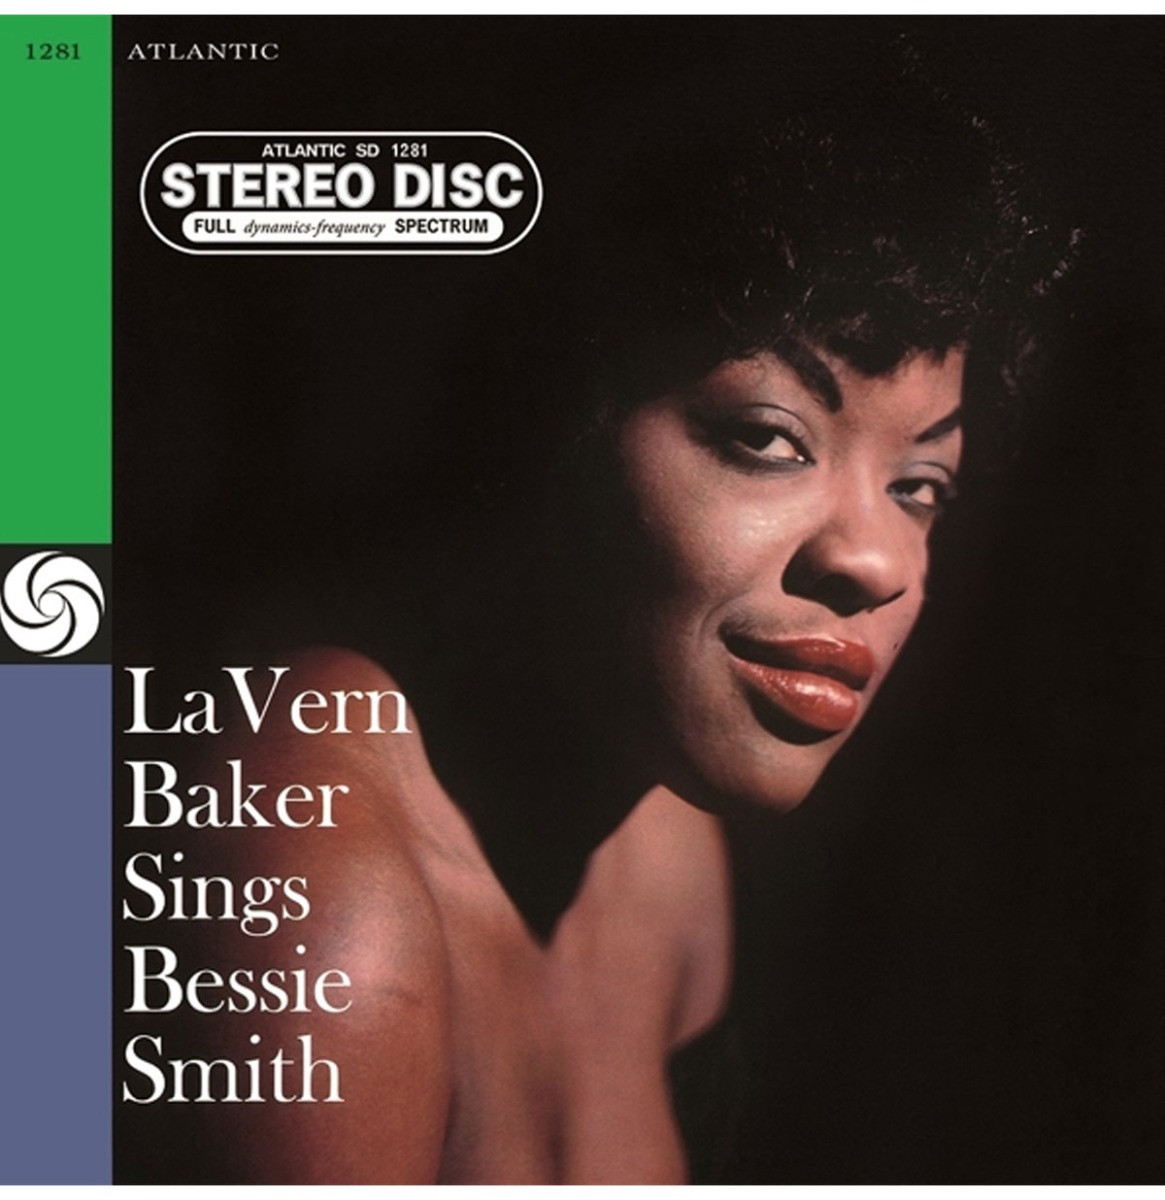 LaVern Baker - LaVern Baker Sings Bessie Smith LP